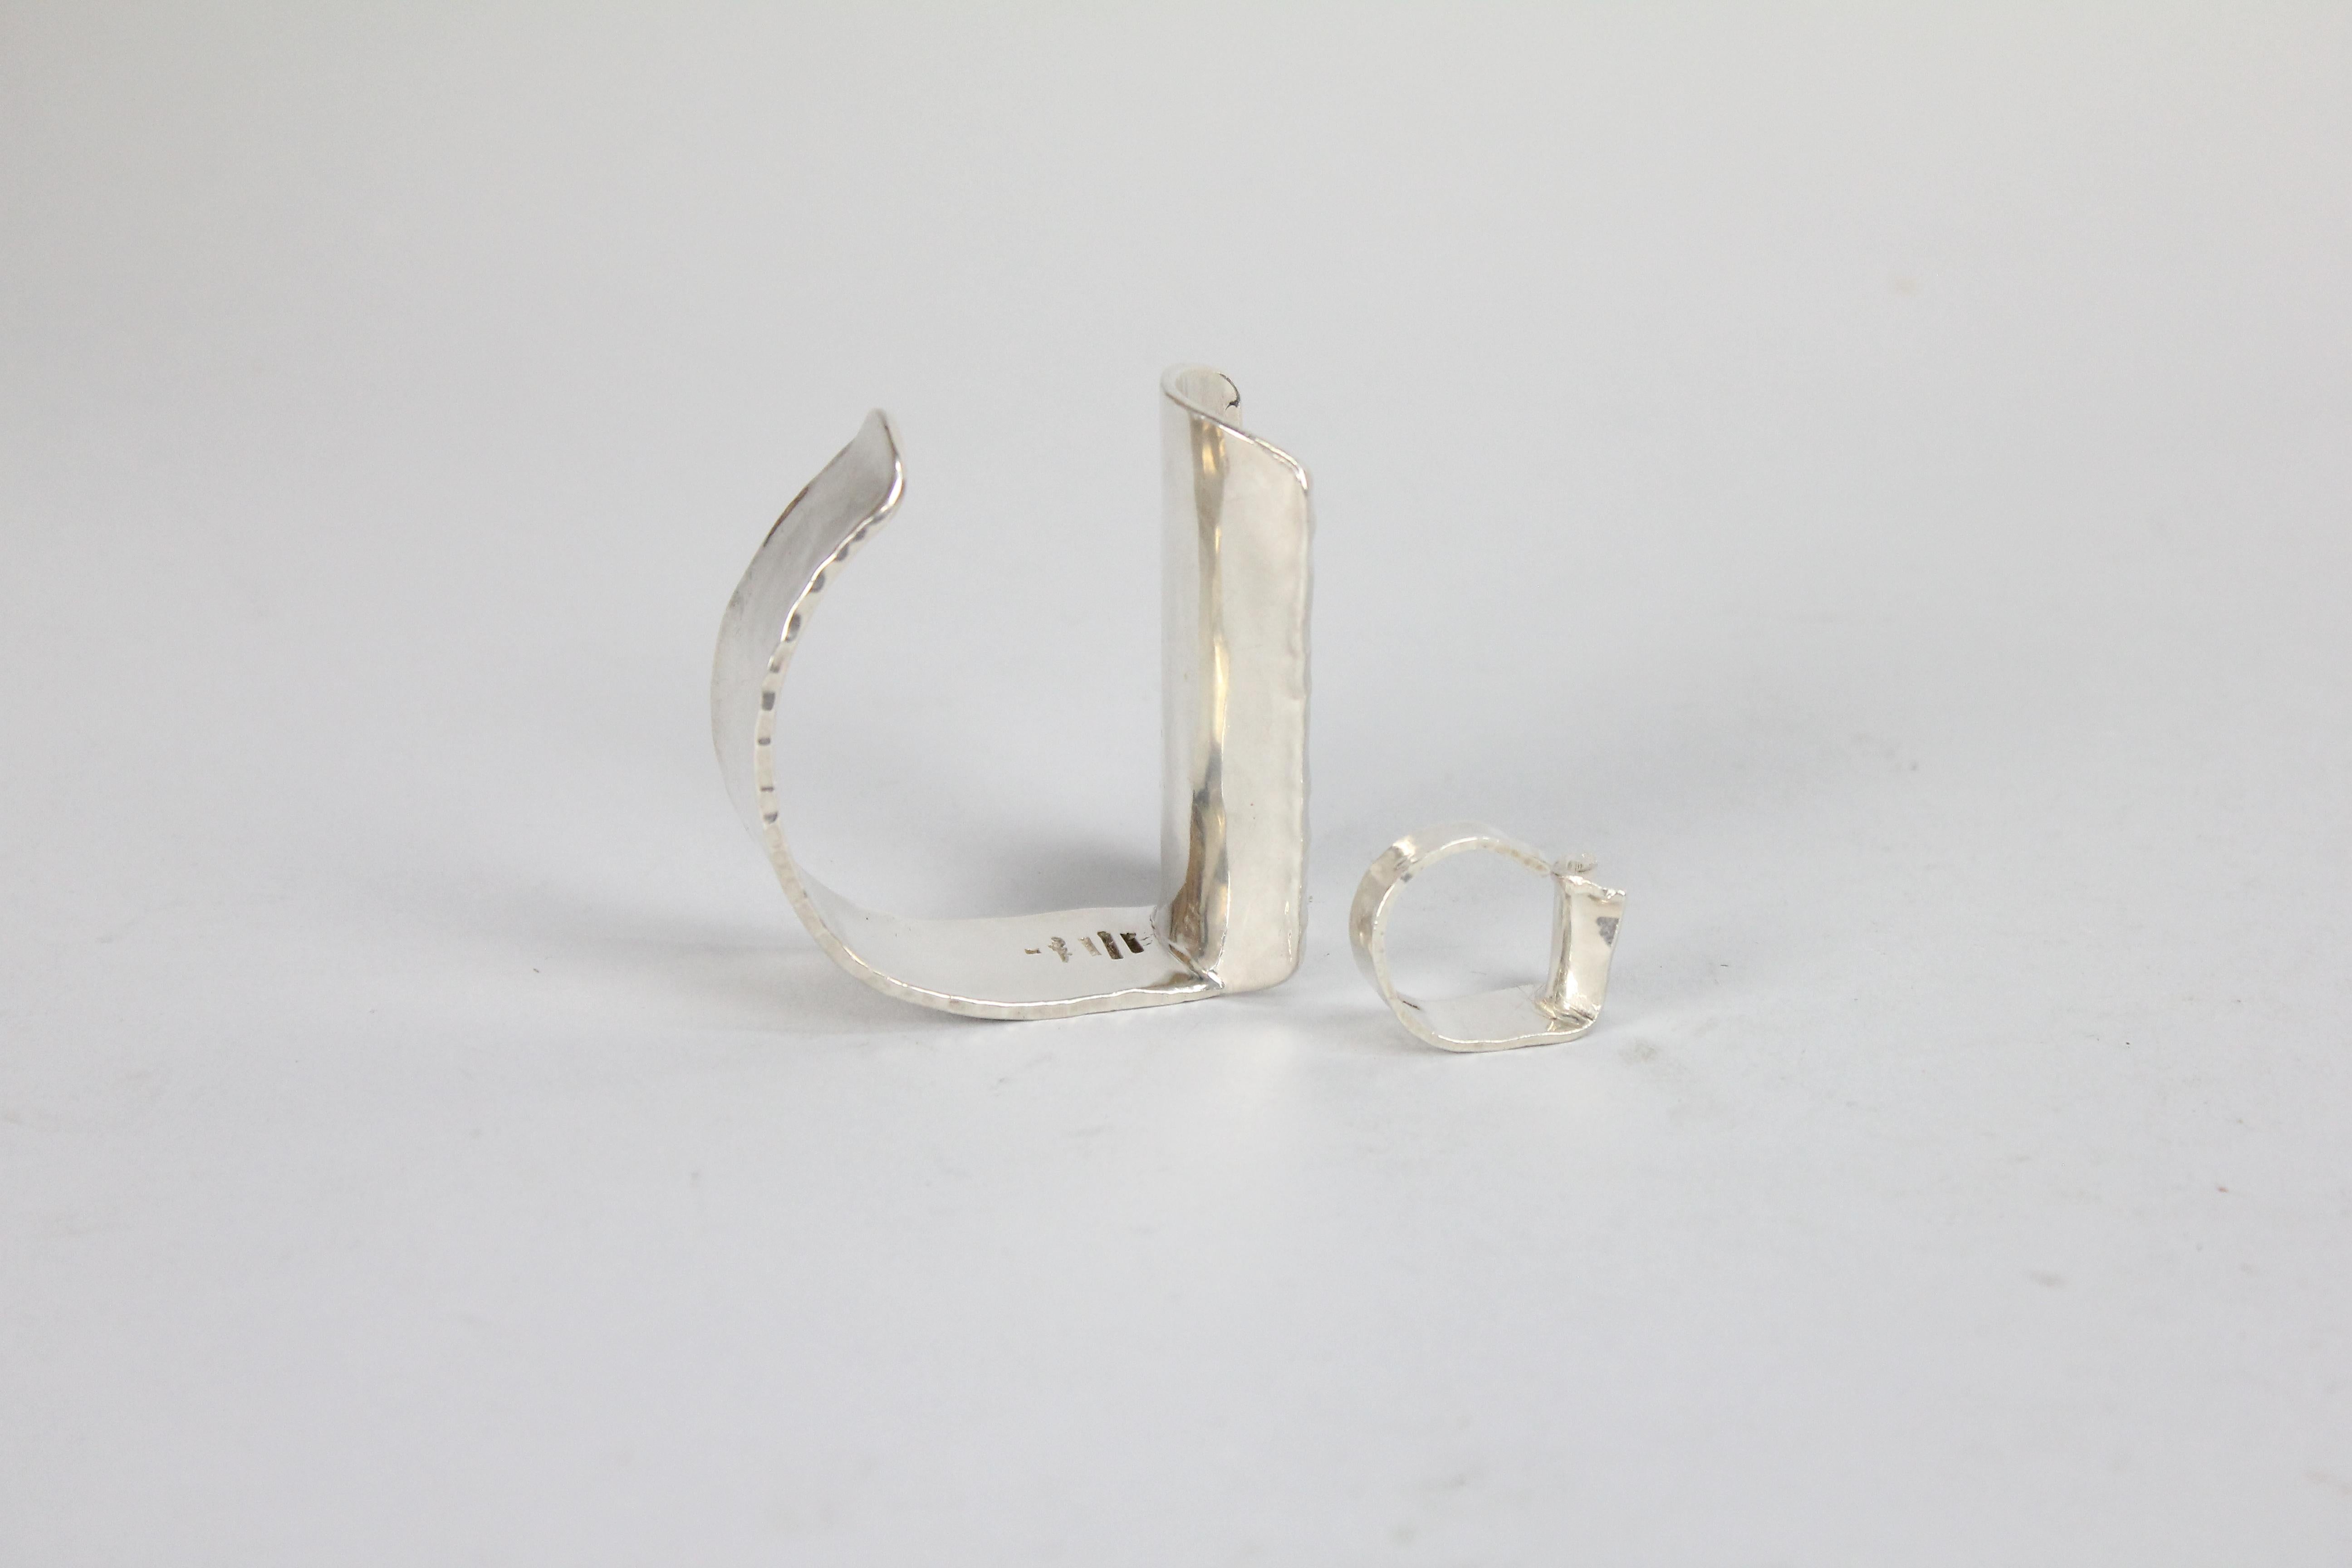 silver ring and bracelet set